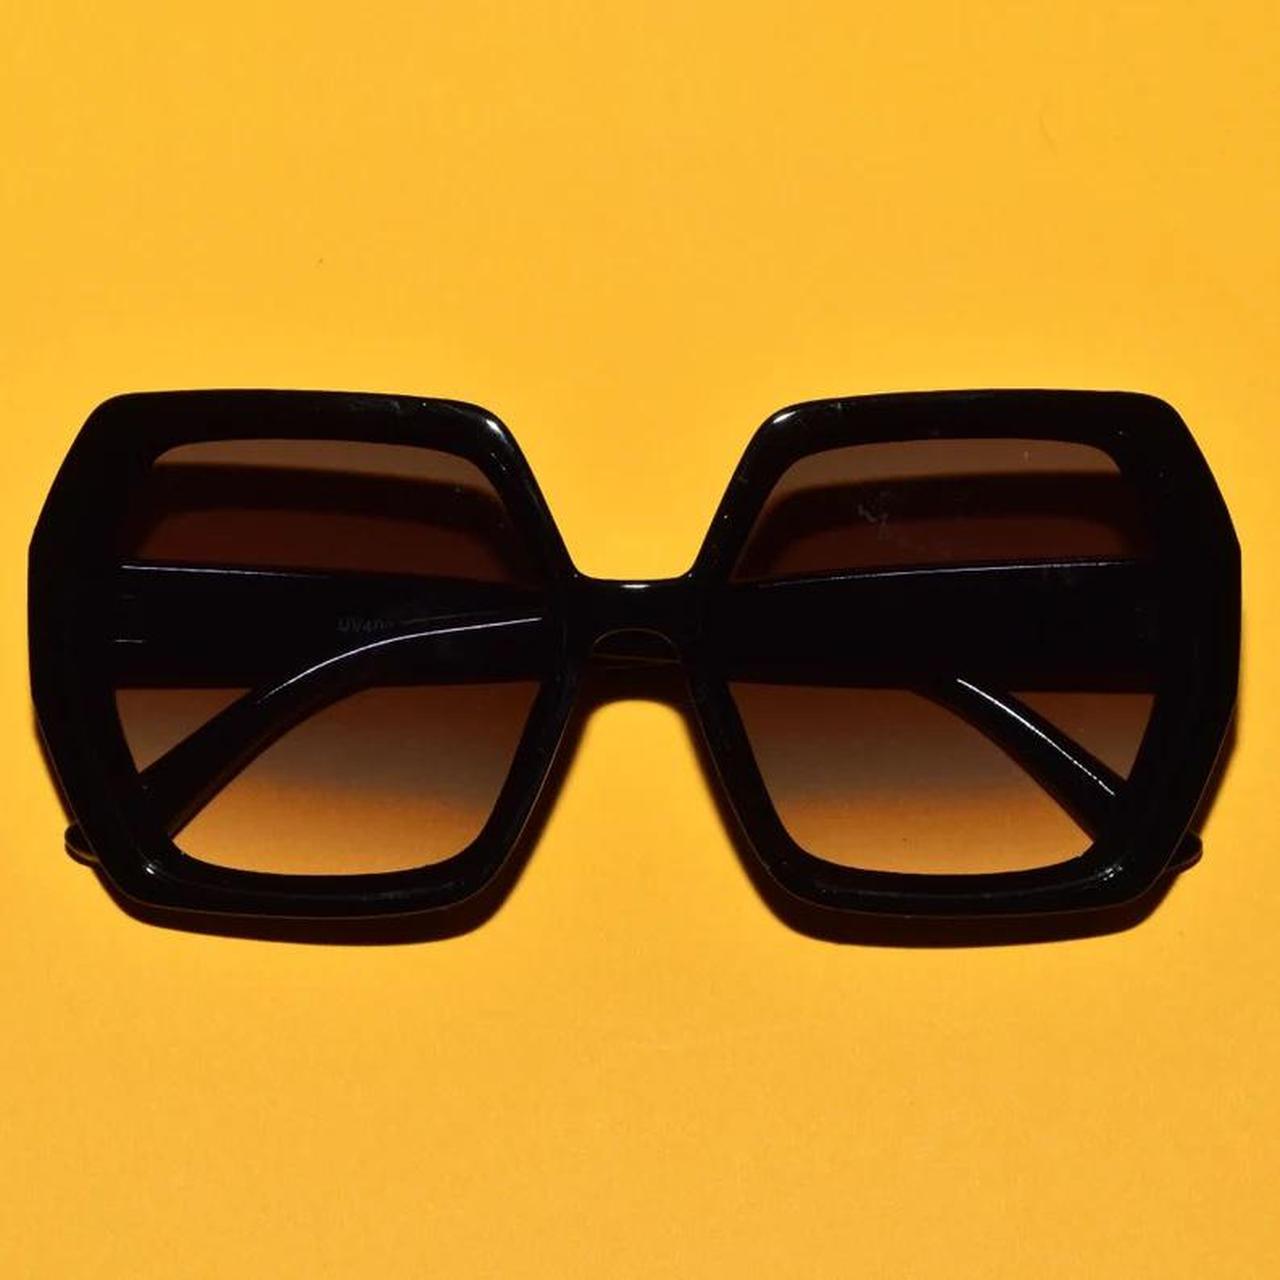 1970s Vintage Style Oversized Square Sunglasses Depop